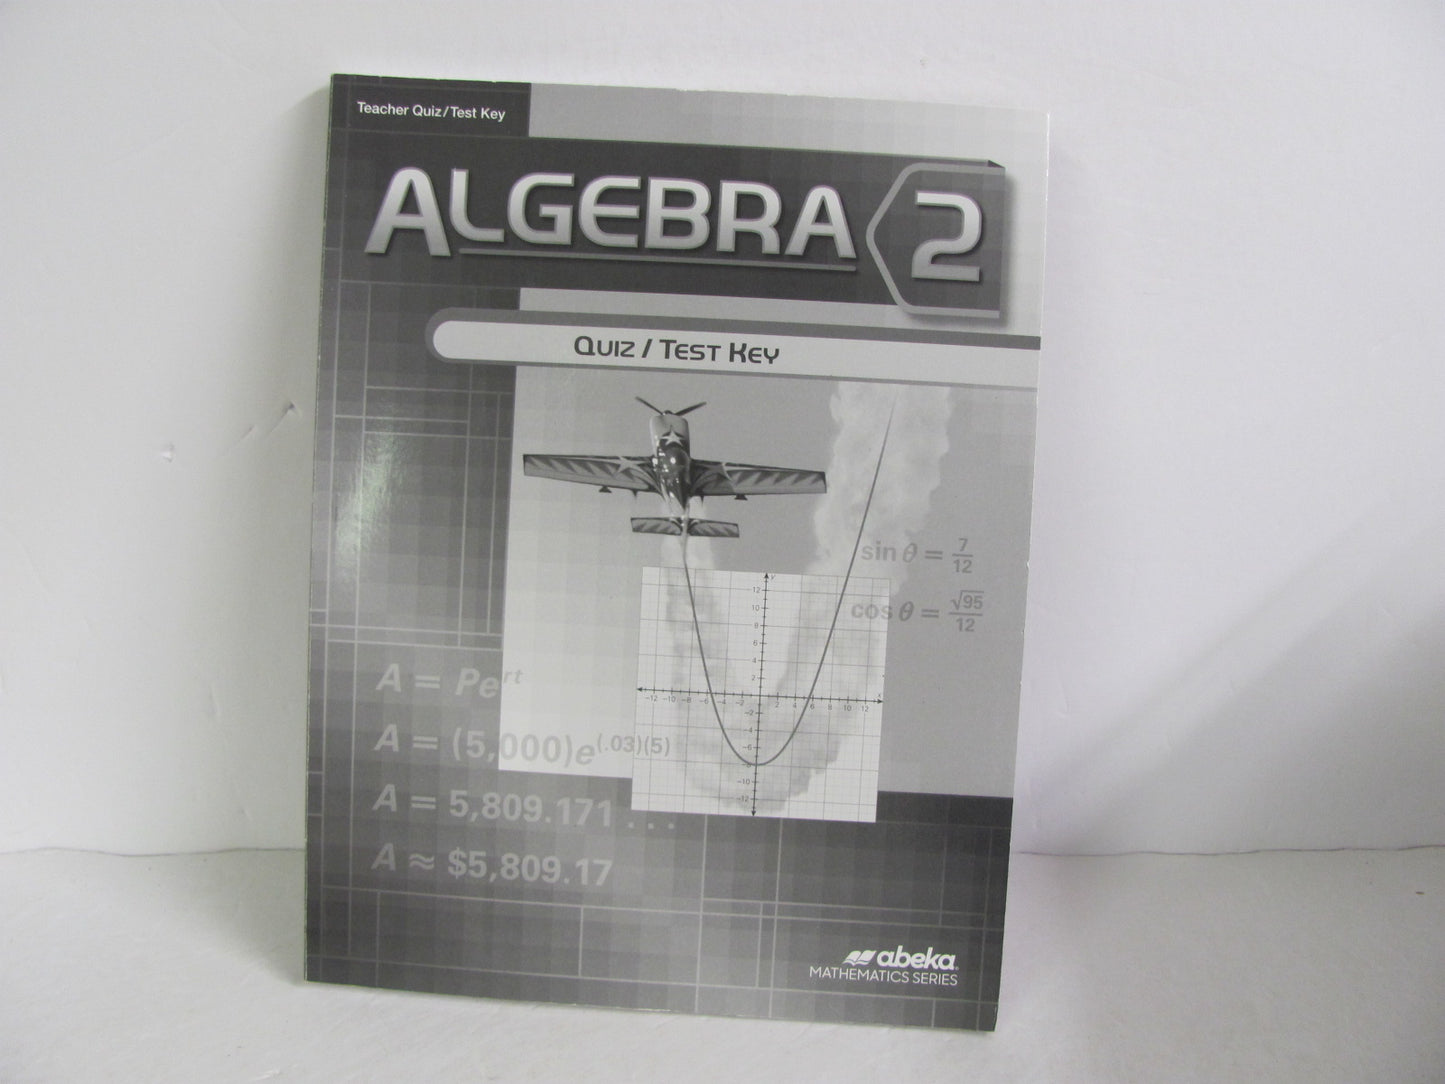 Algebra 2 Abeka Quiz/Test Key  Pre-Owned 10th Grade Mathematics Textbooks